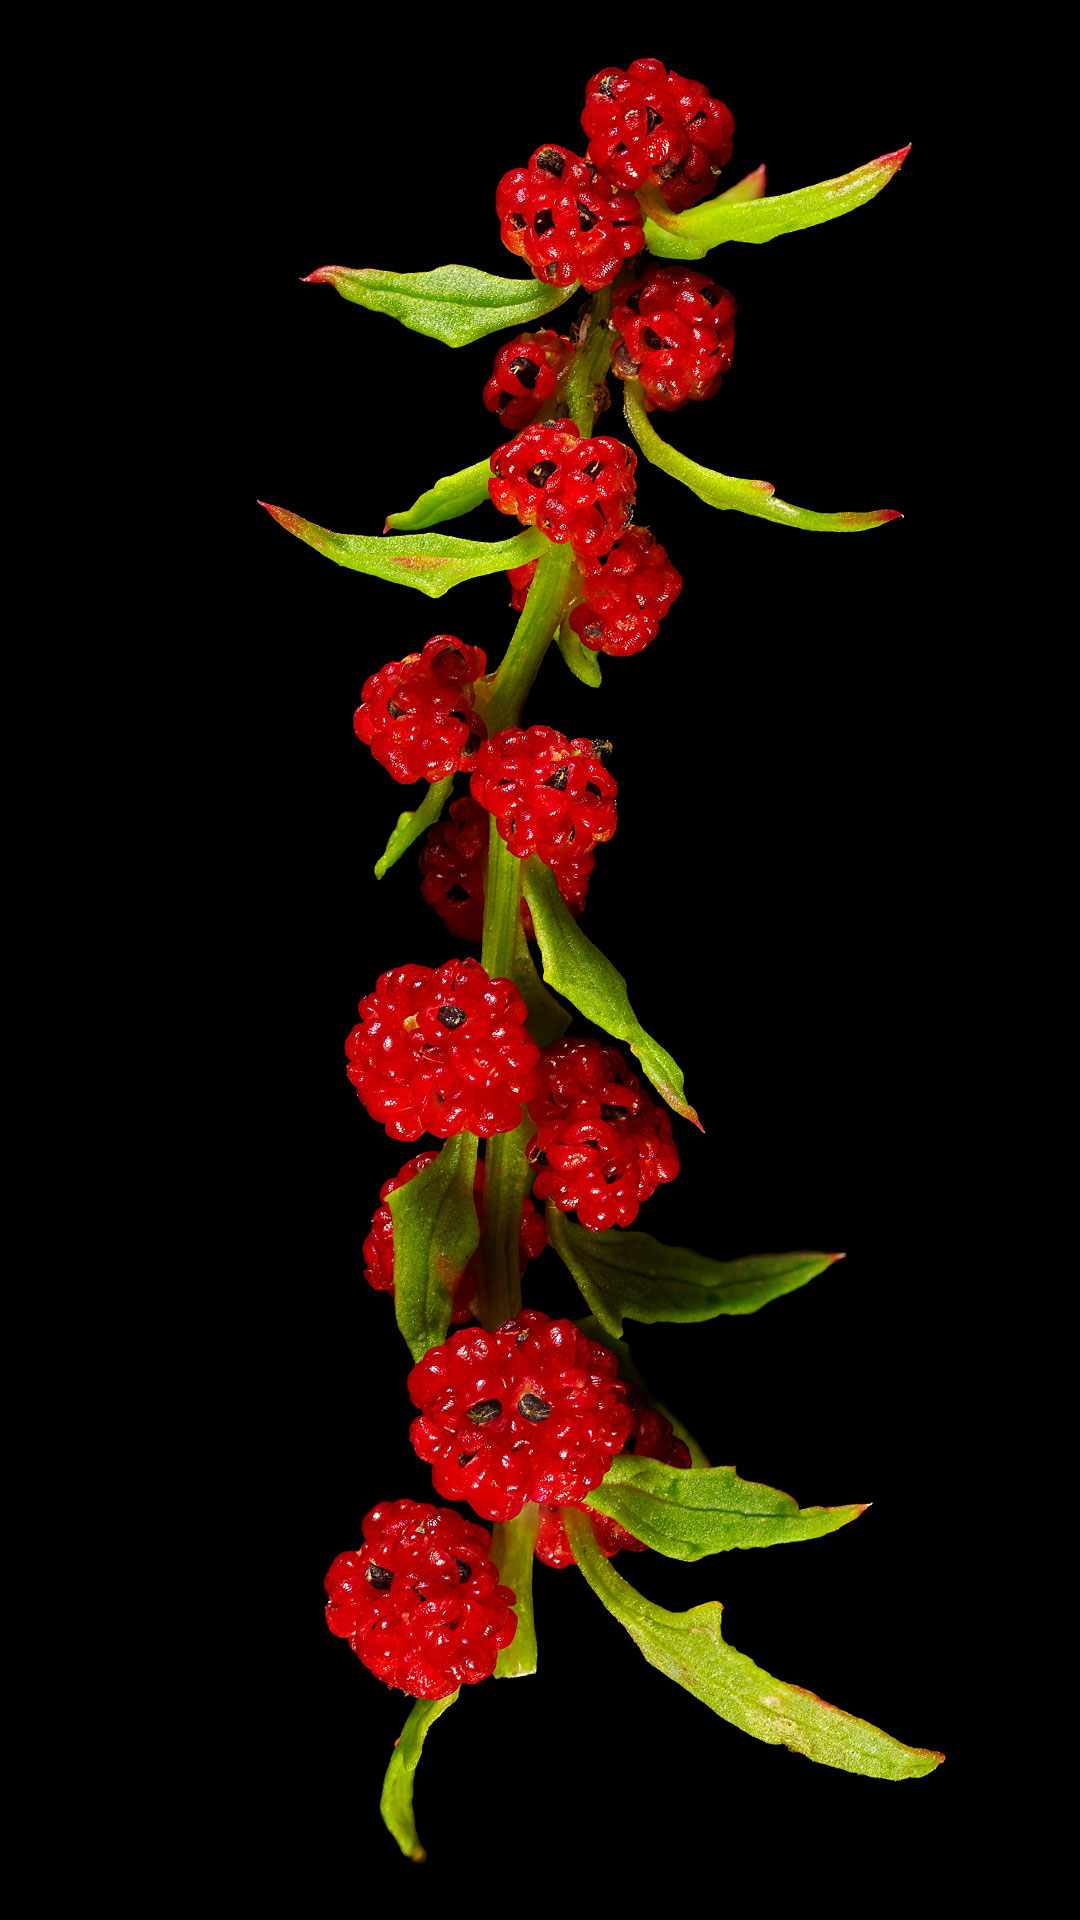 Leafy goosefoot: Blitum virgatum ‘Strawberry-Sticks’